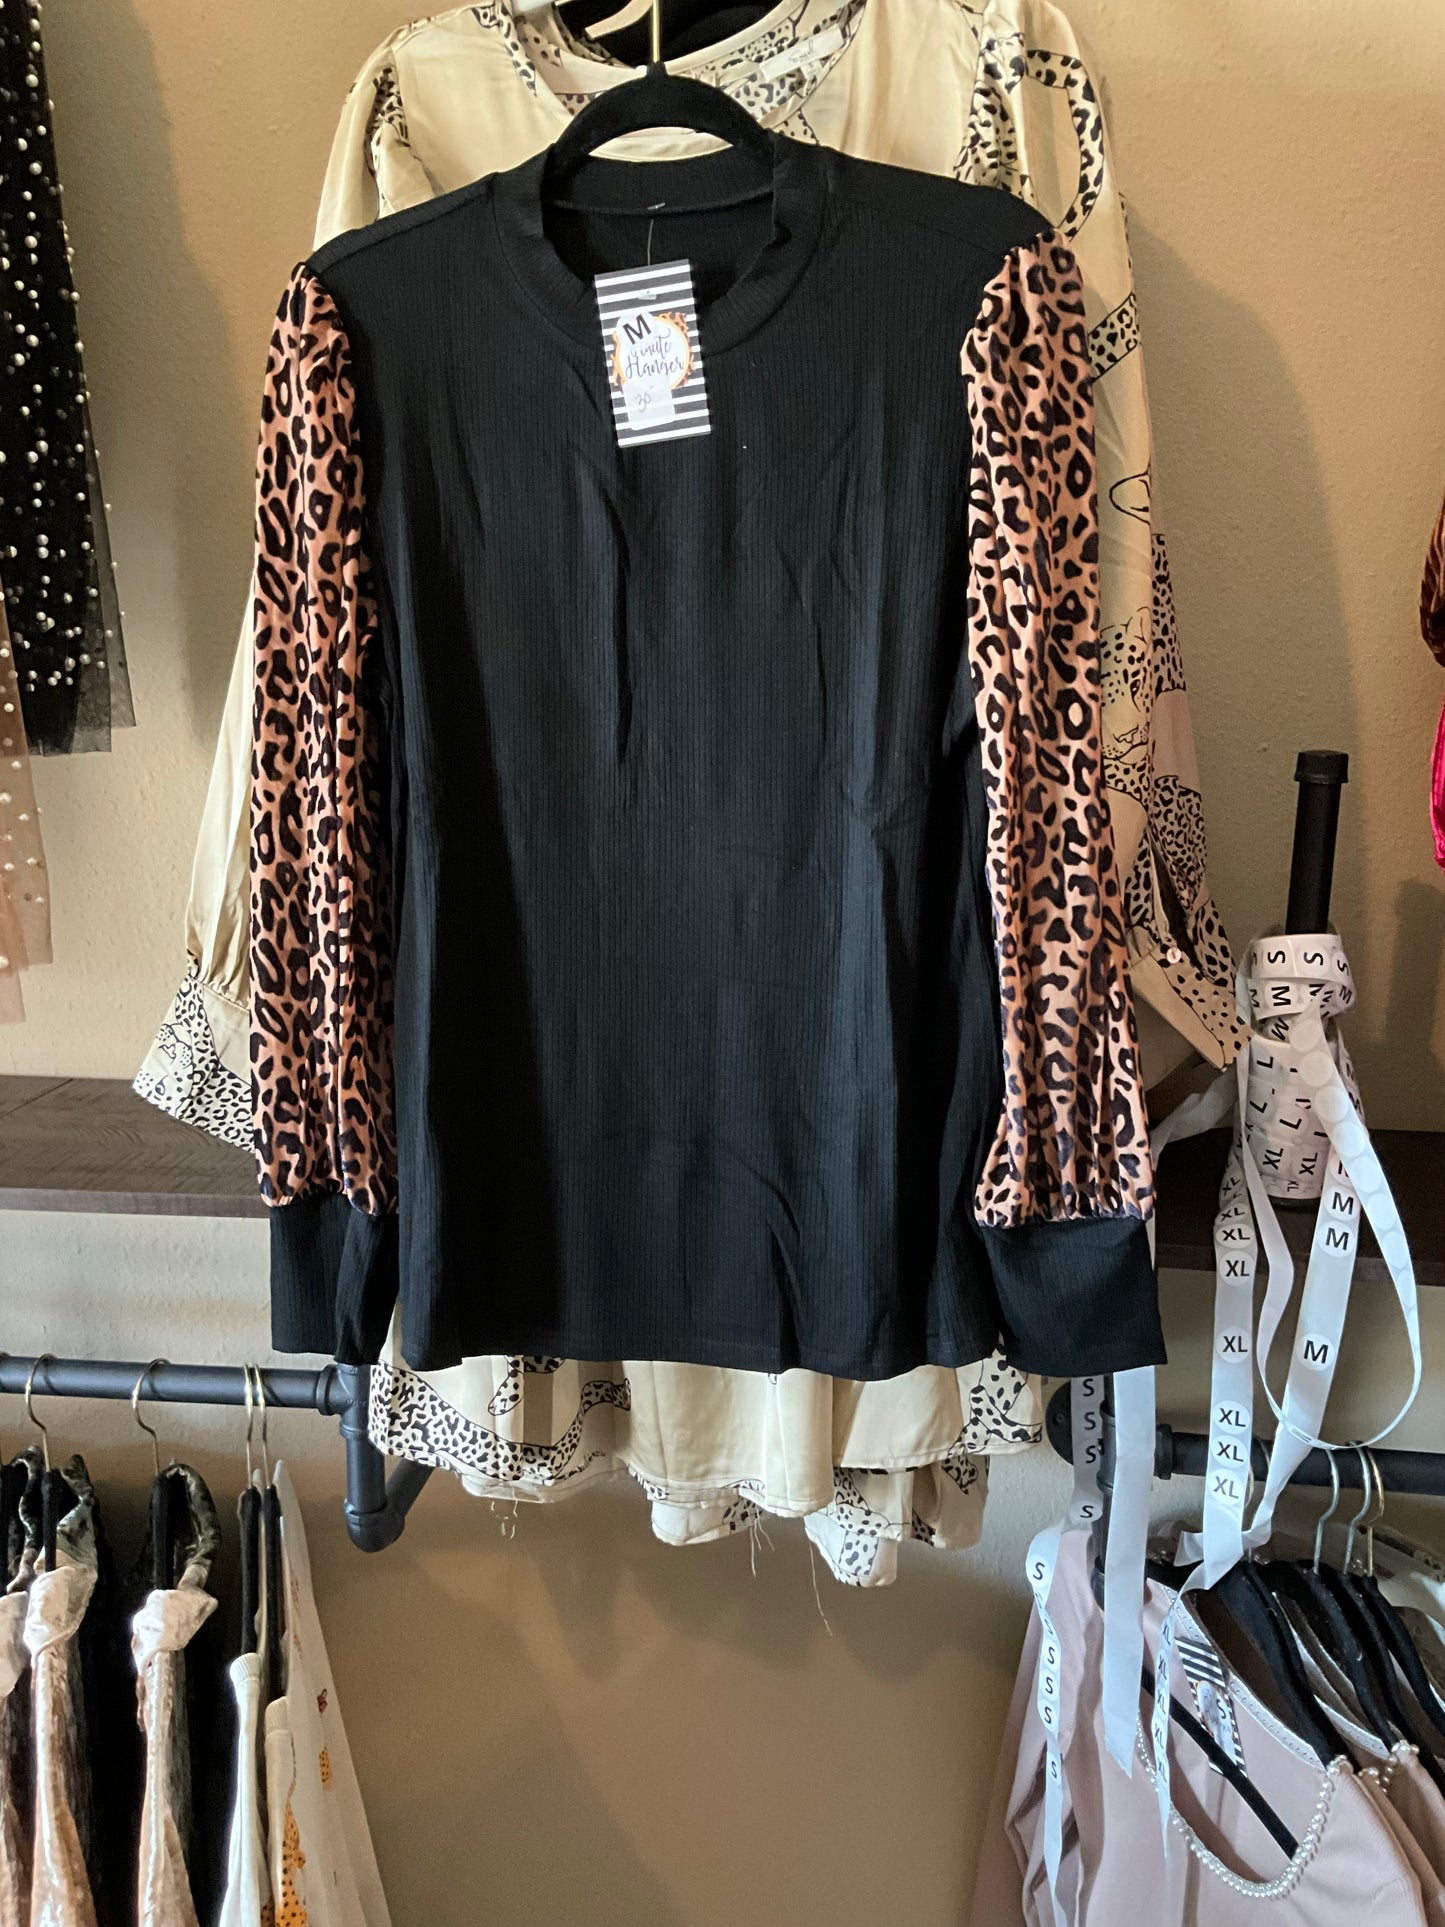 Leopard sleeve / Anniewear